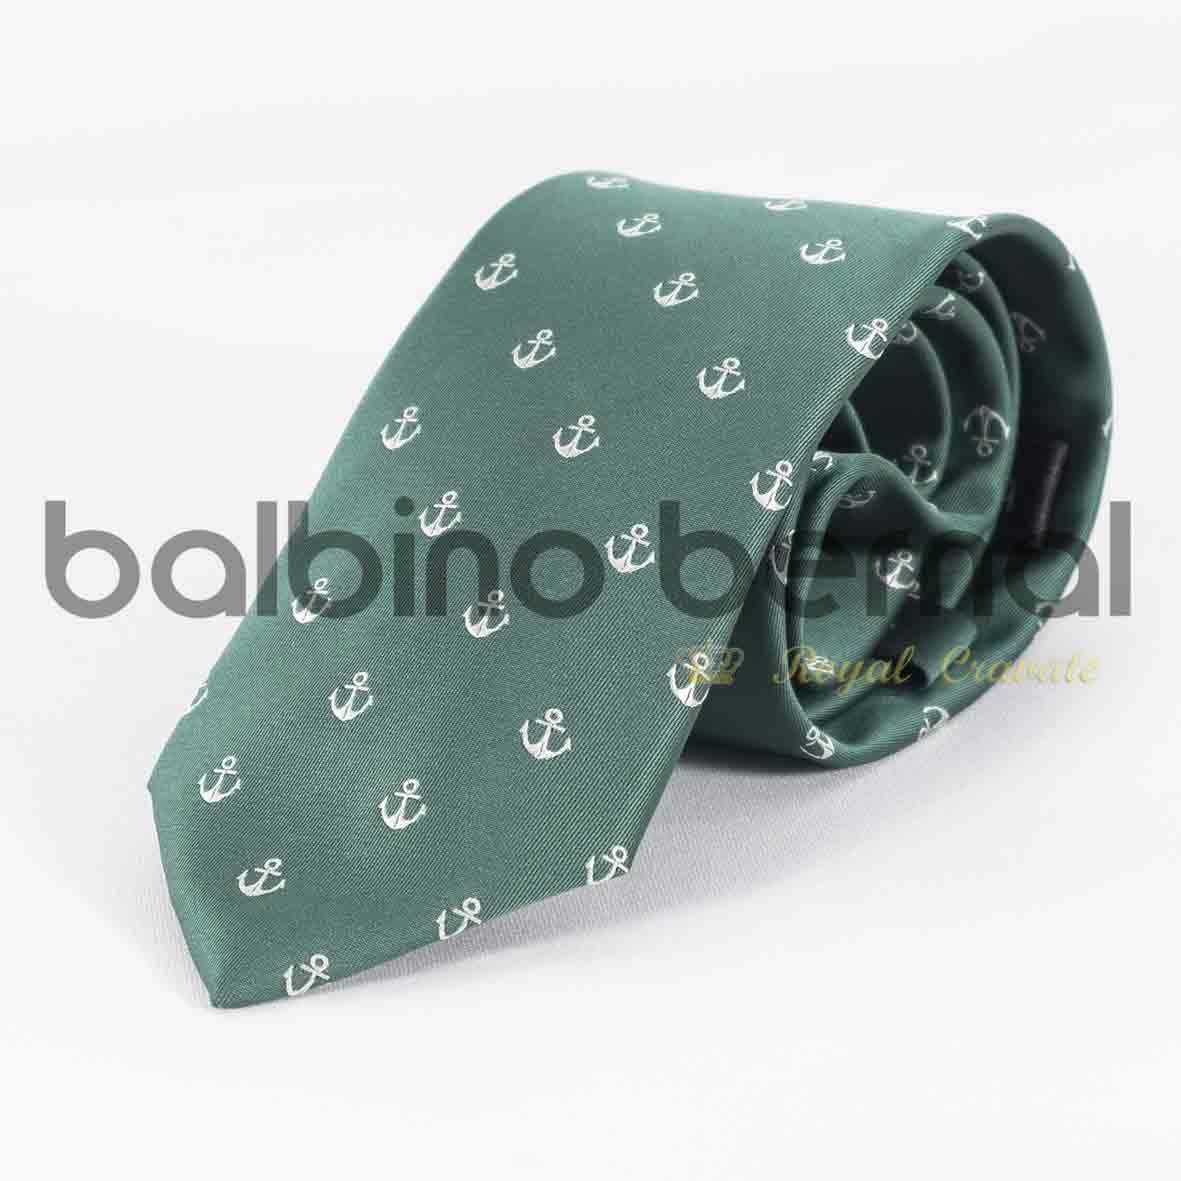 Diseño Verde Bl. – Balbino Bernal – y Complementos